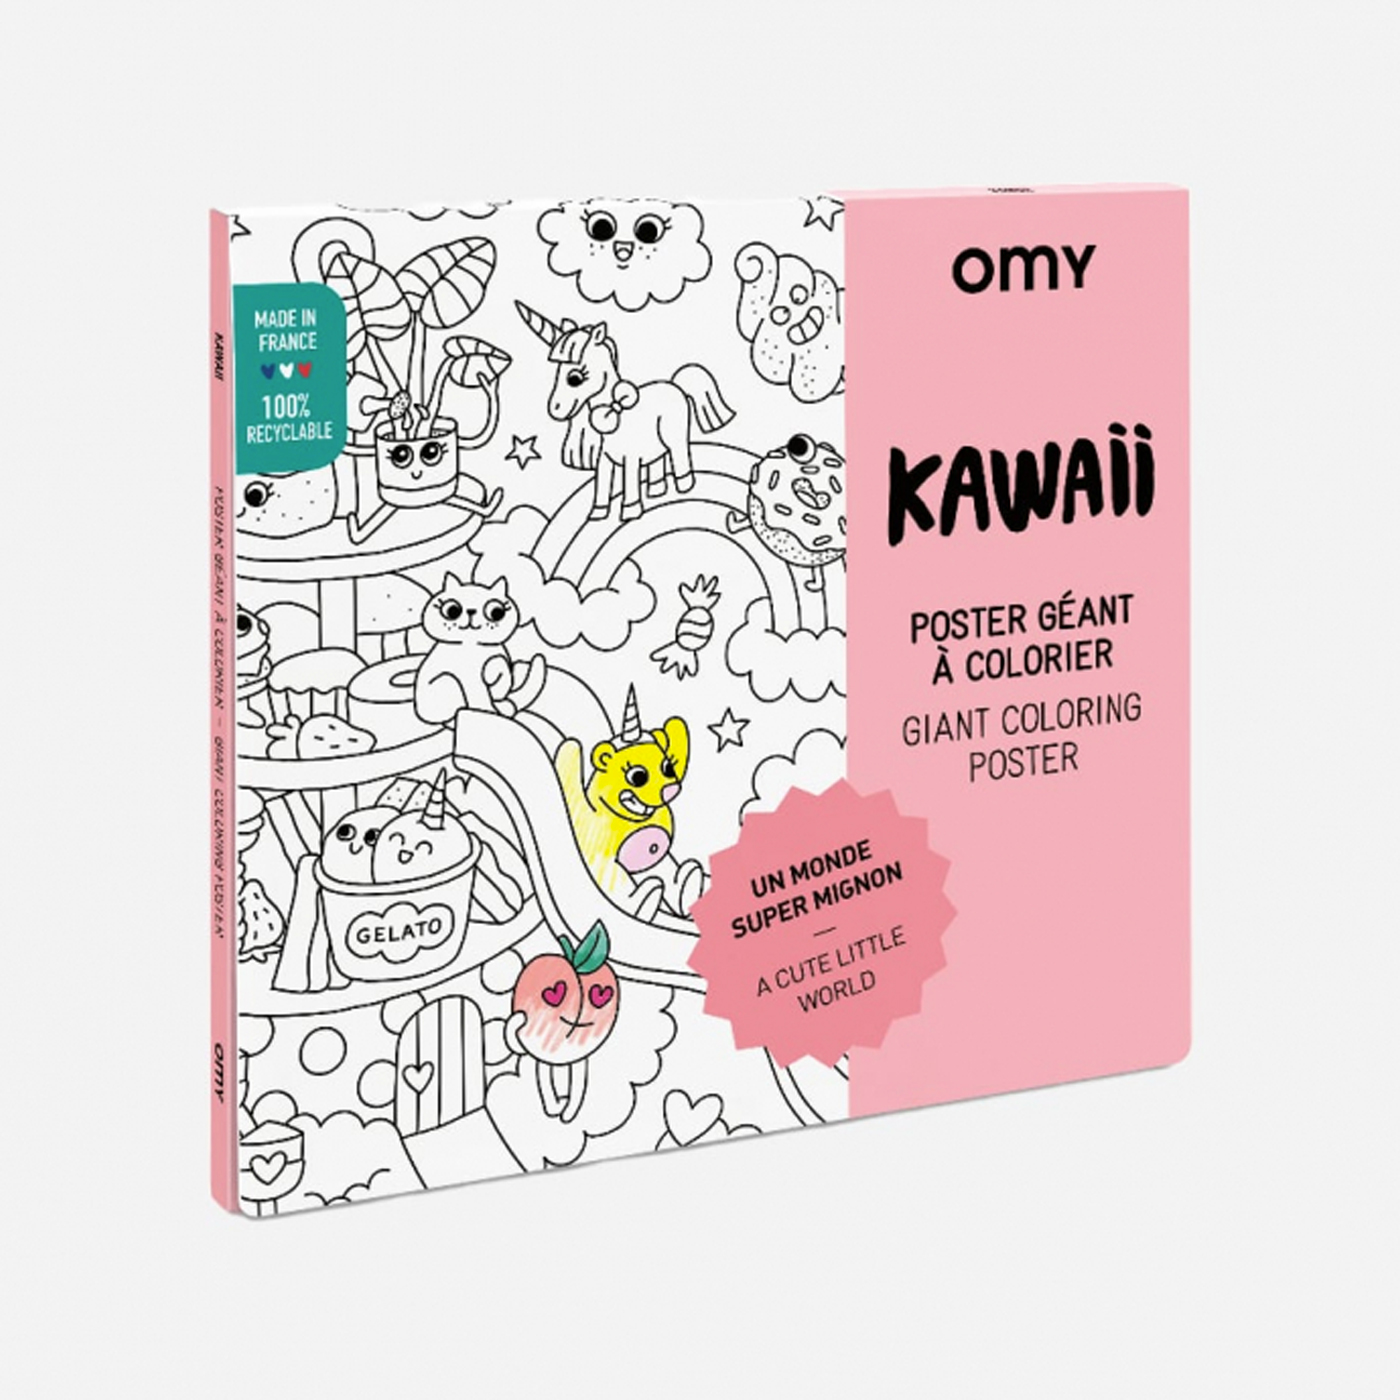 OMY Omy Coloring Poster  | Kawaii